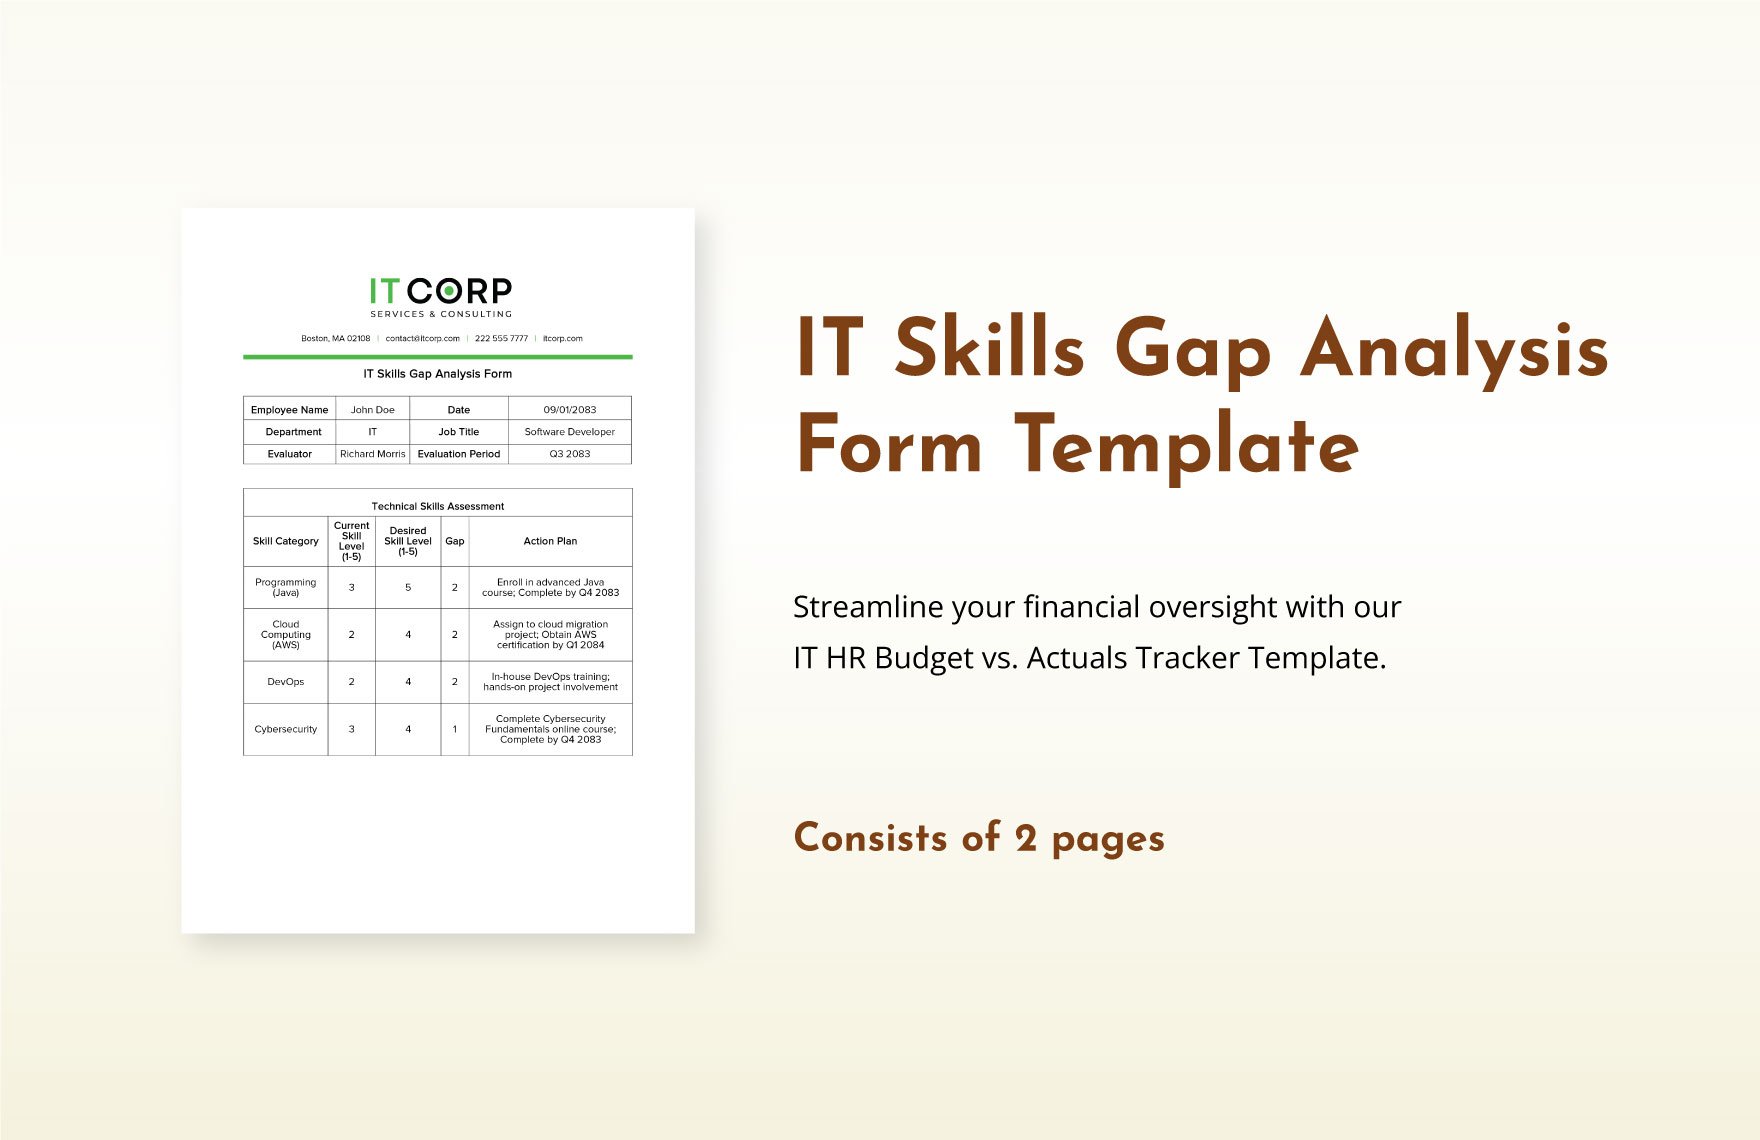 IT Skills Gap Analysis Form Template